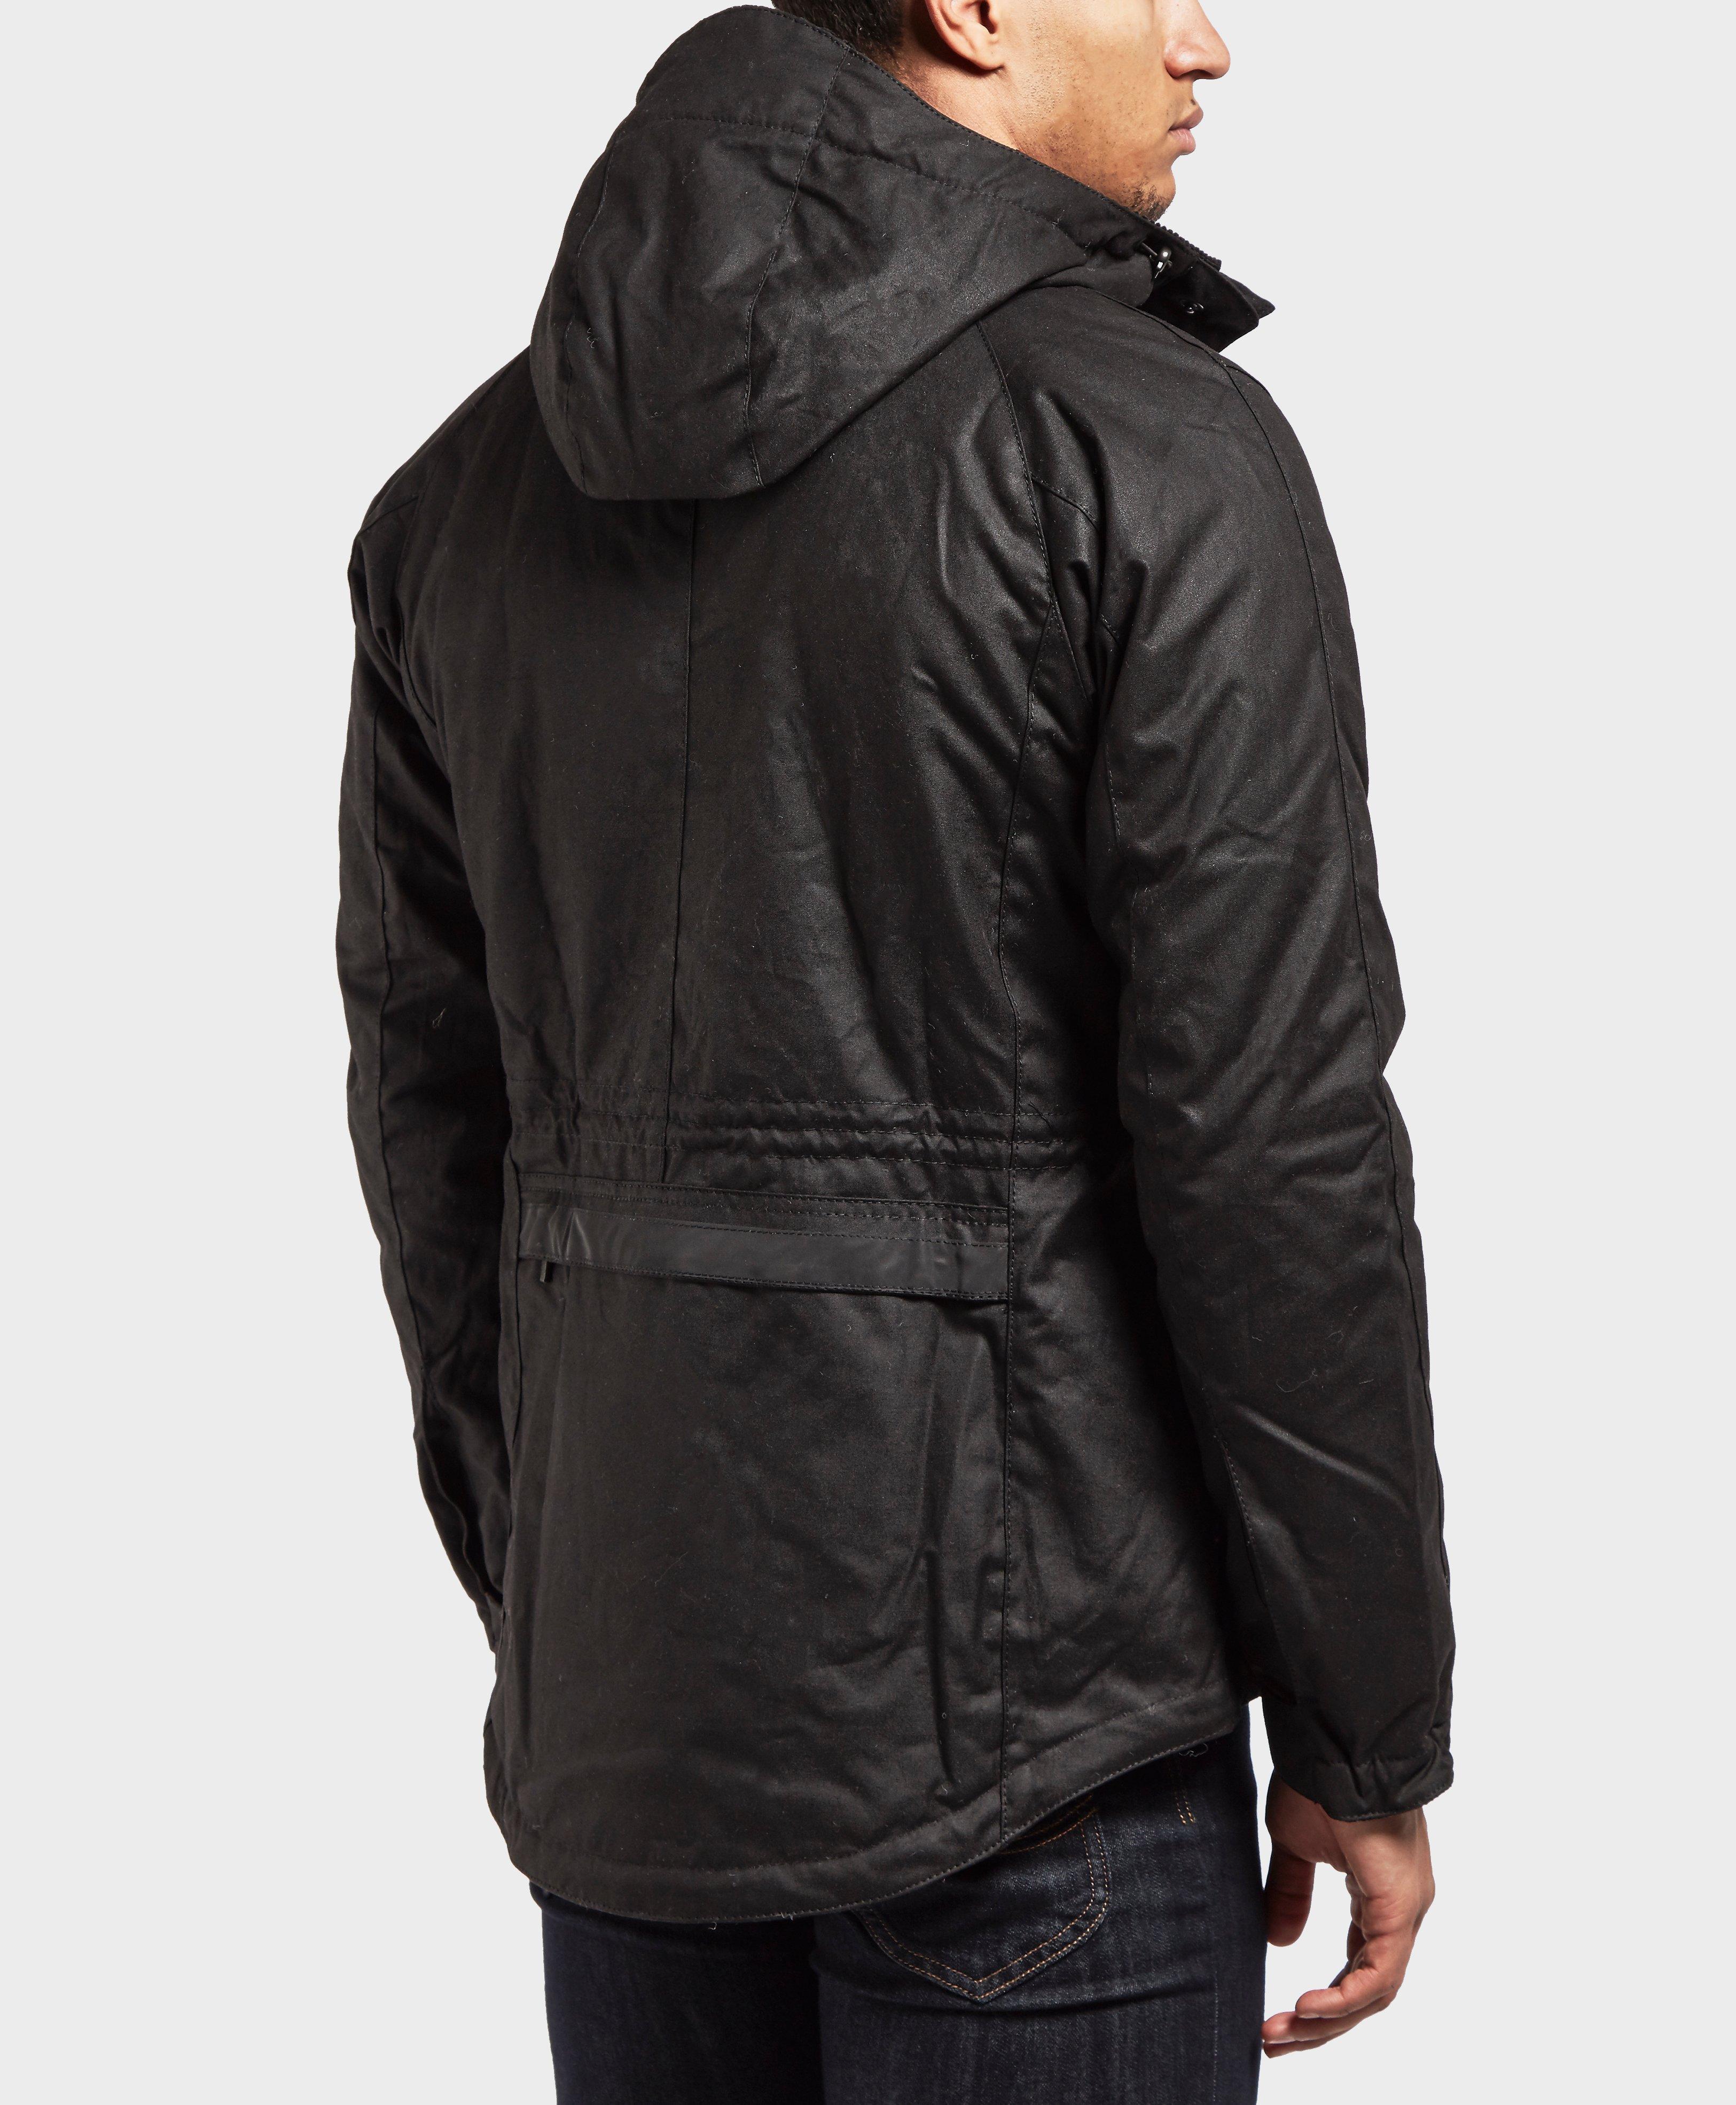 Barbour Cotton International Delta Wax Jacket - Online Exclusive in Black  for Men - Lyst